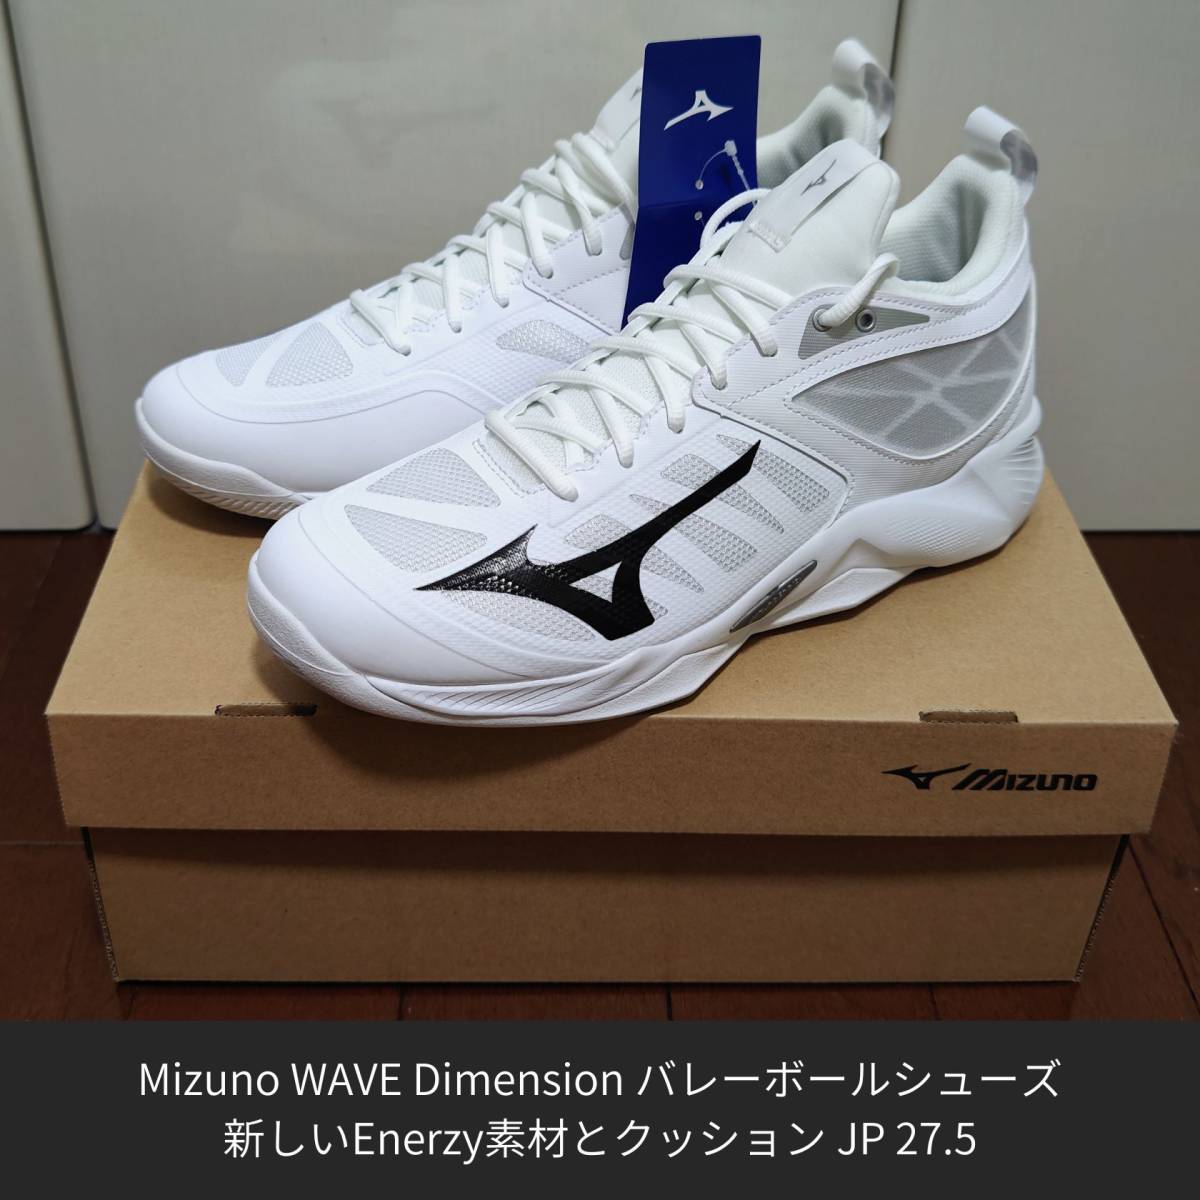 Mizuno WAVE Dimension バレーボールシューズ バスケットボールも使用可能 JP 27.5 軽量 305g / 一度試着のみで新品に近い状態_画像1